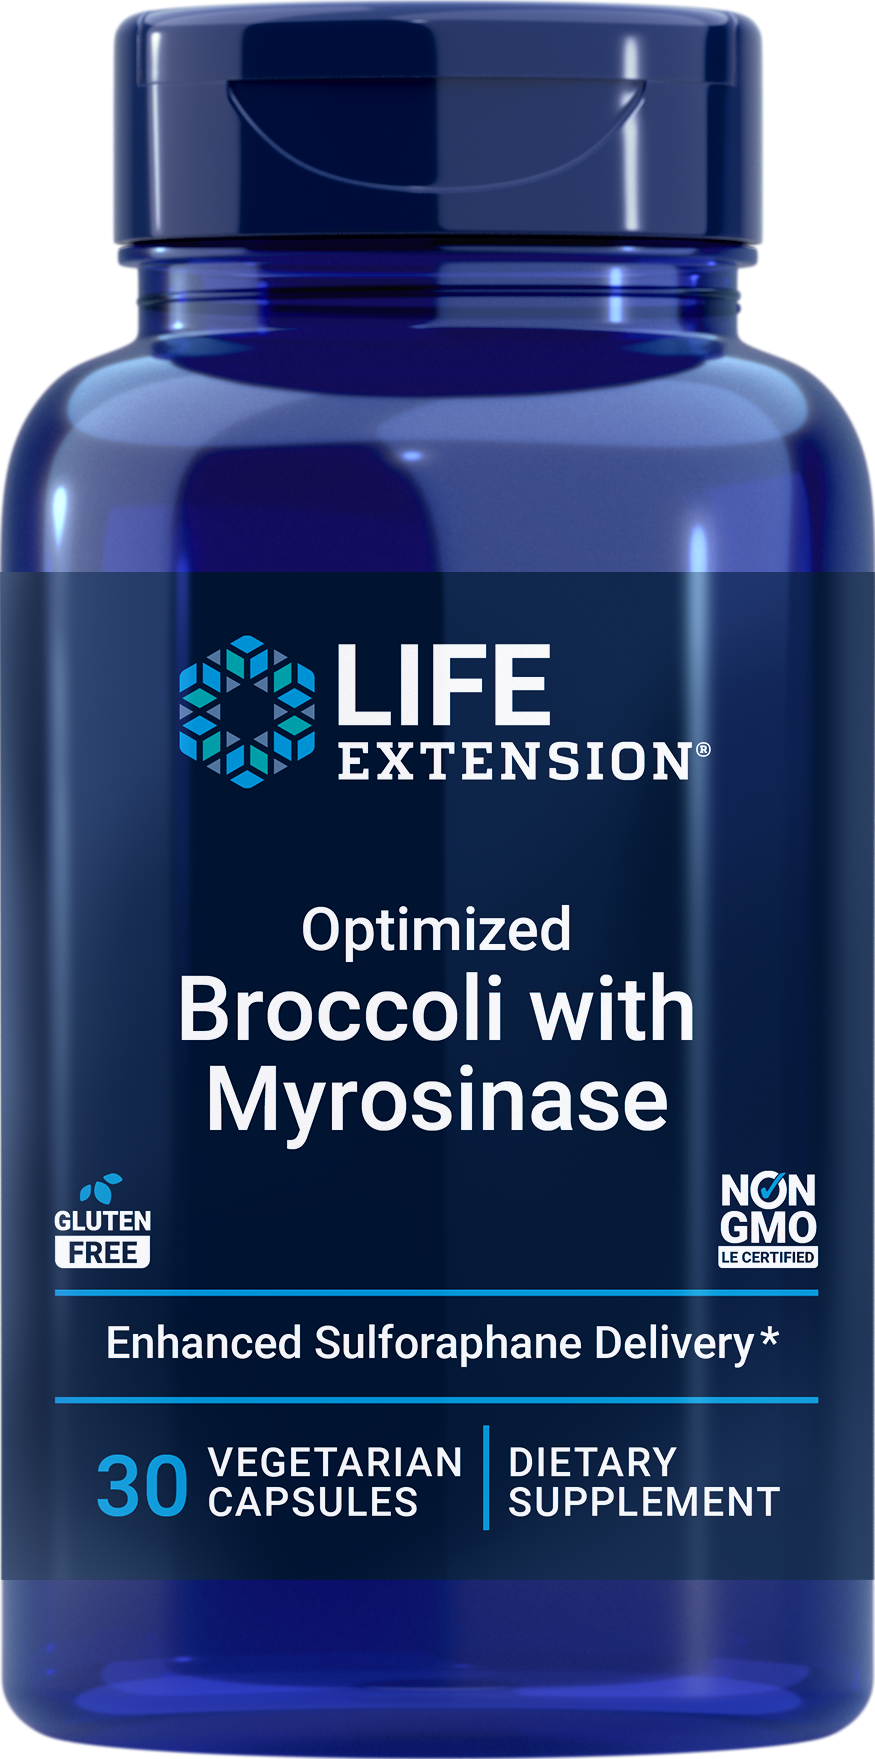 Optimized Broccoli with Myrosinase